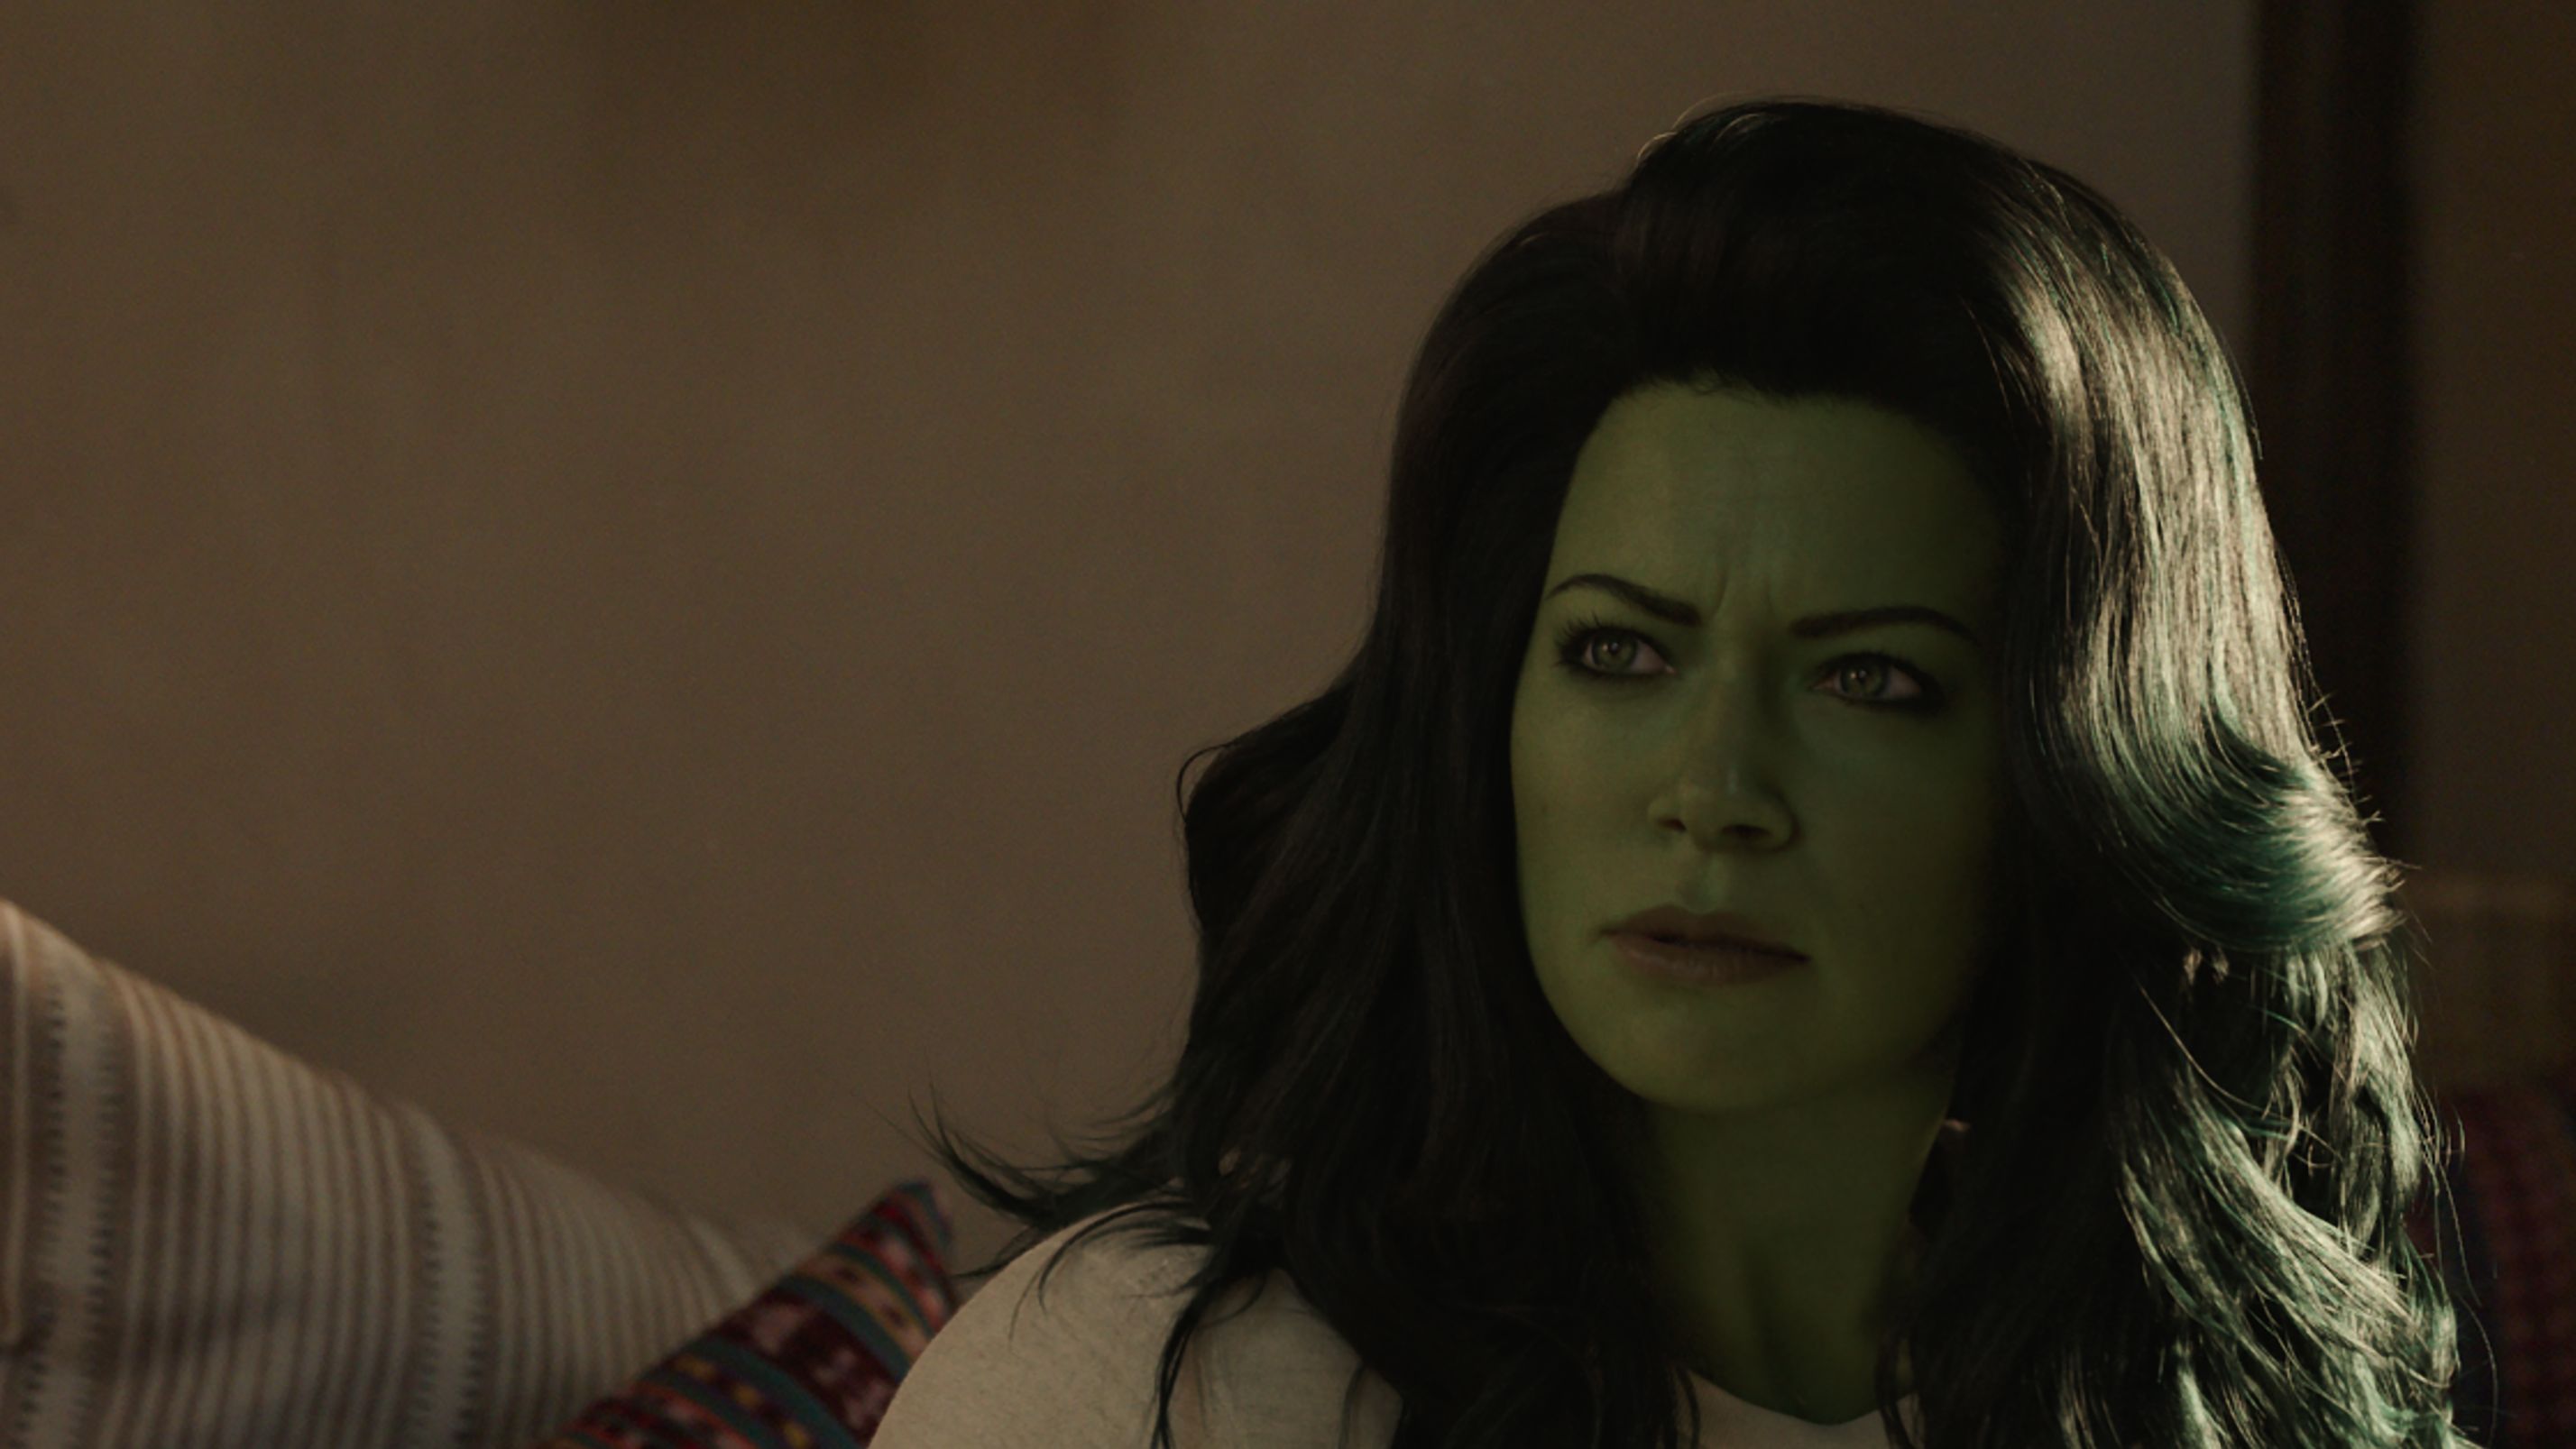 She-Hulk cast, Full list of characters in Marvel series